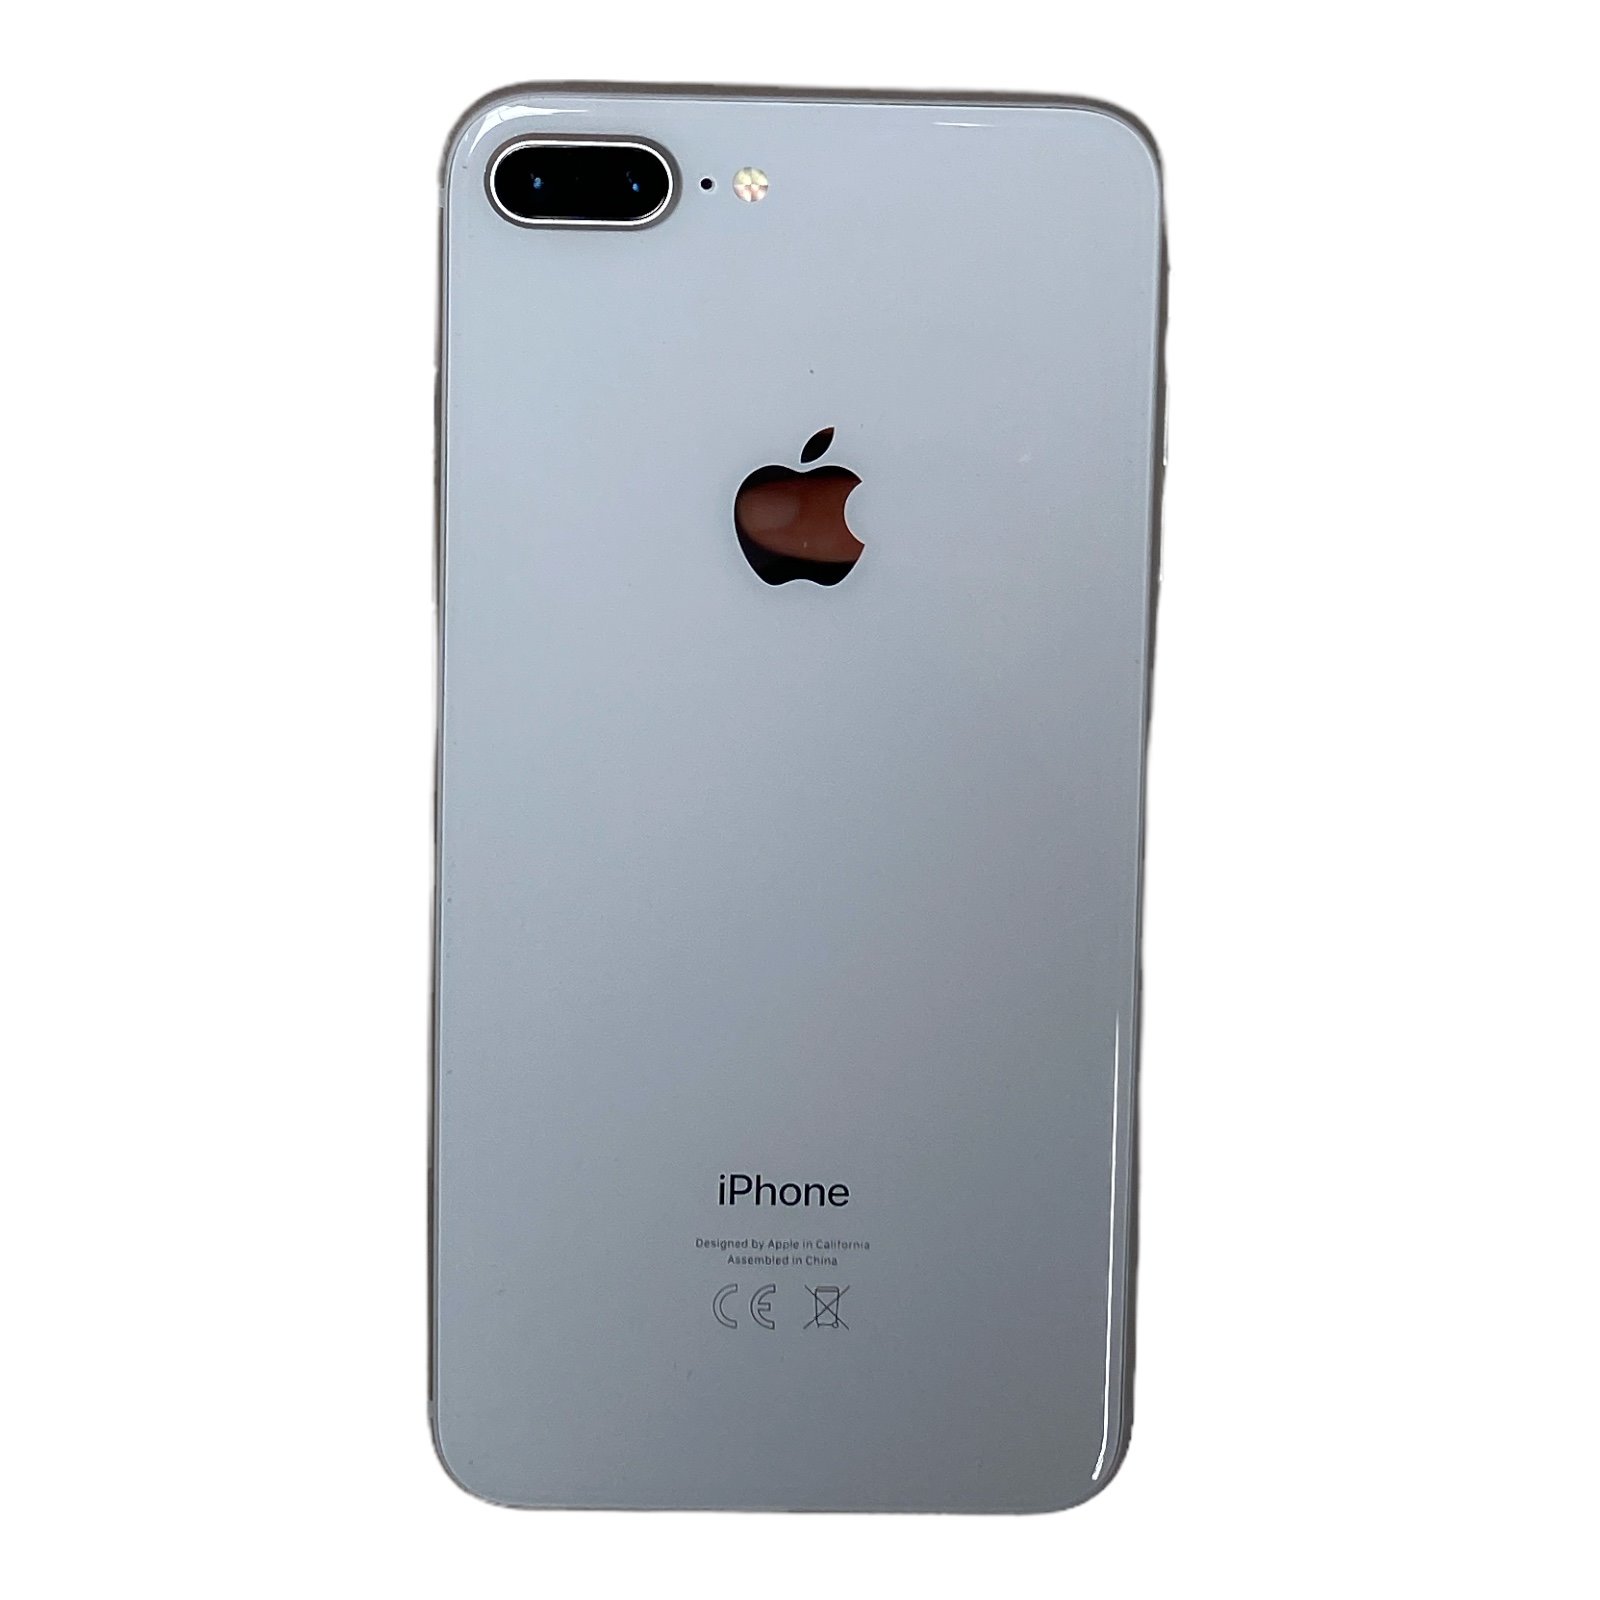 Apple iPhone 8 Plus Glasbruch C- Ware 64GB weiß (Vibrationsmotor beschädigt)